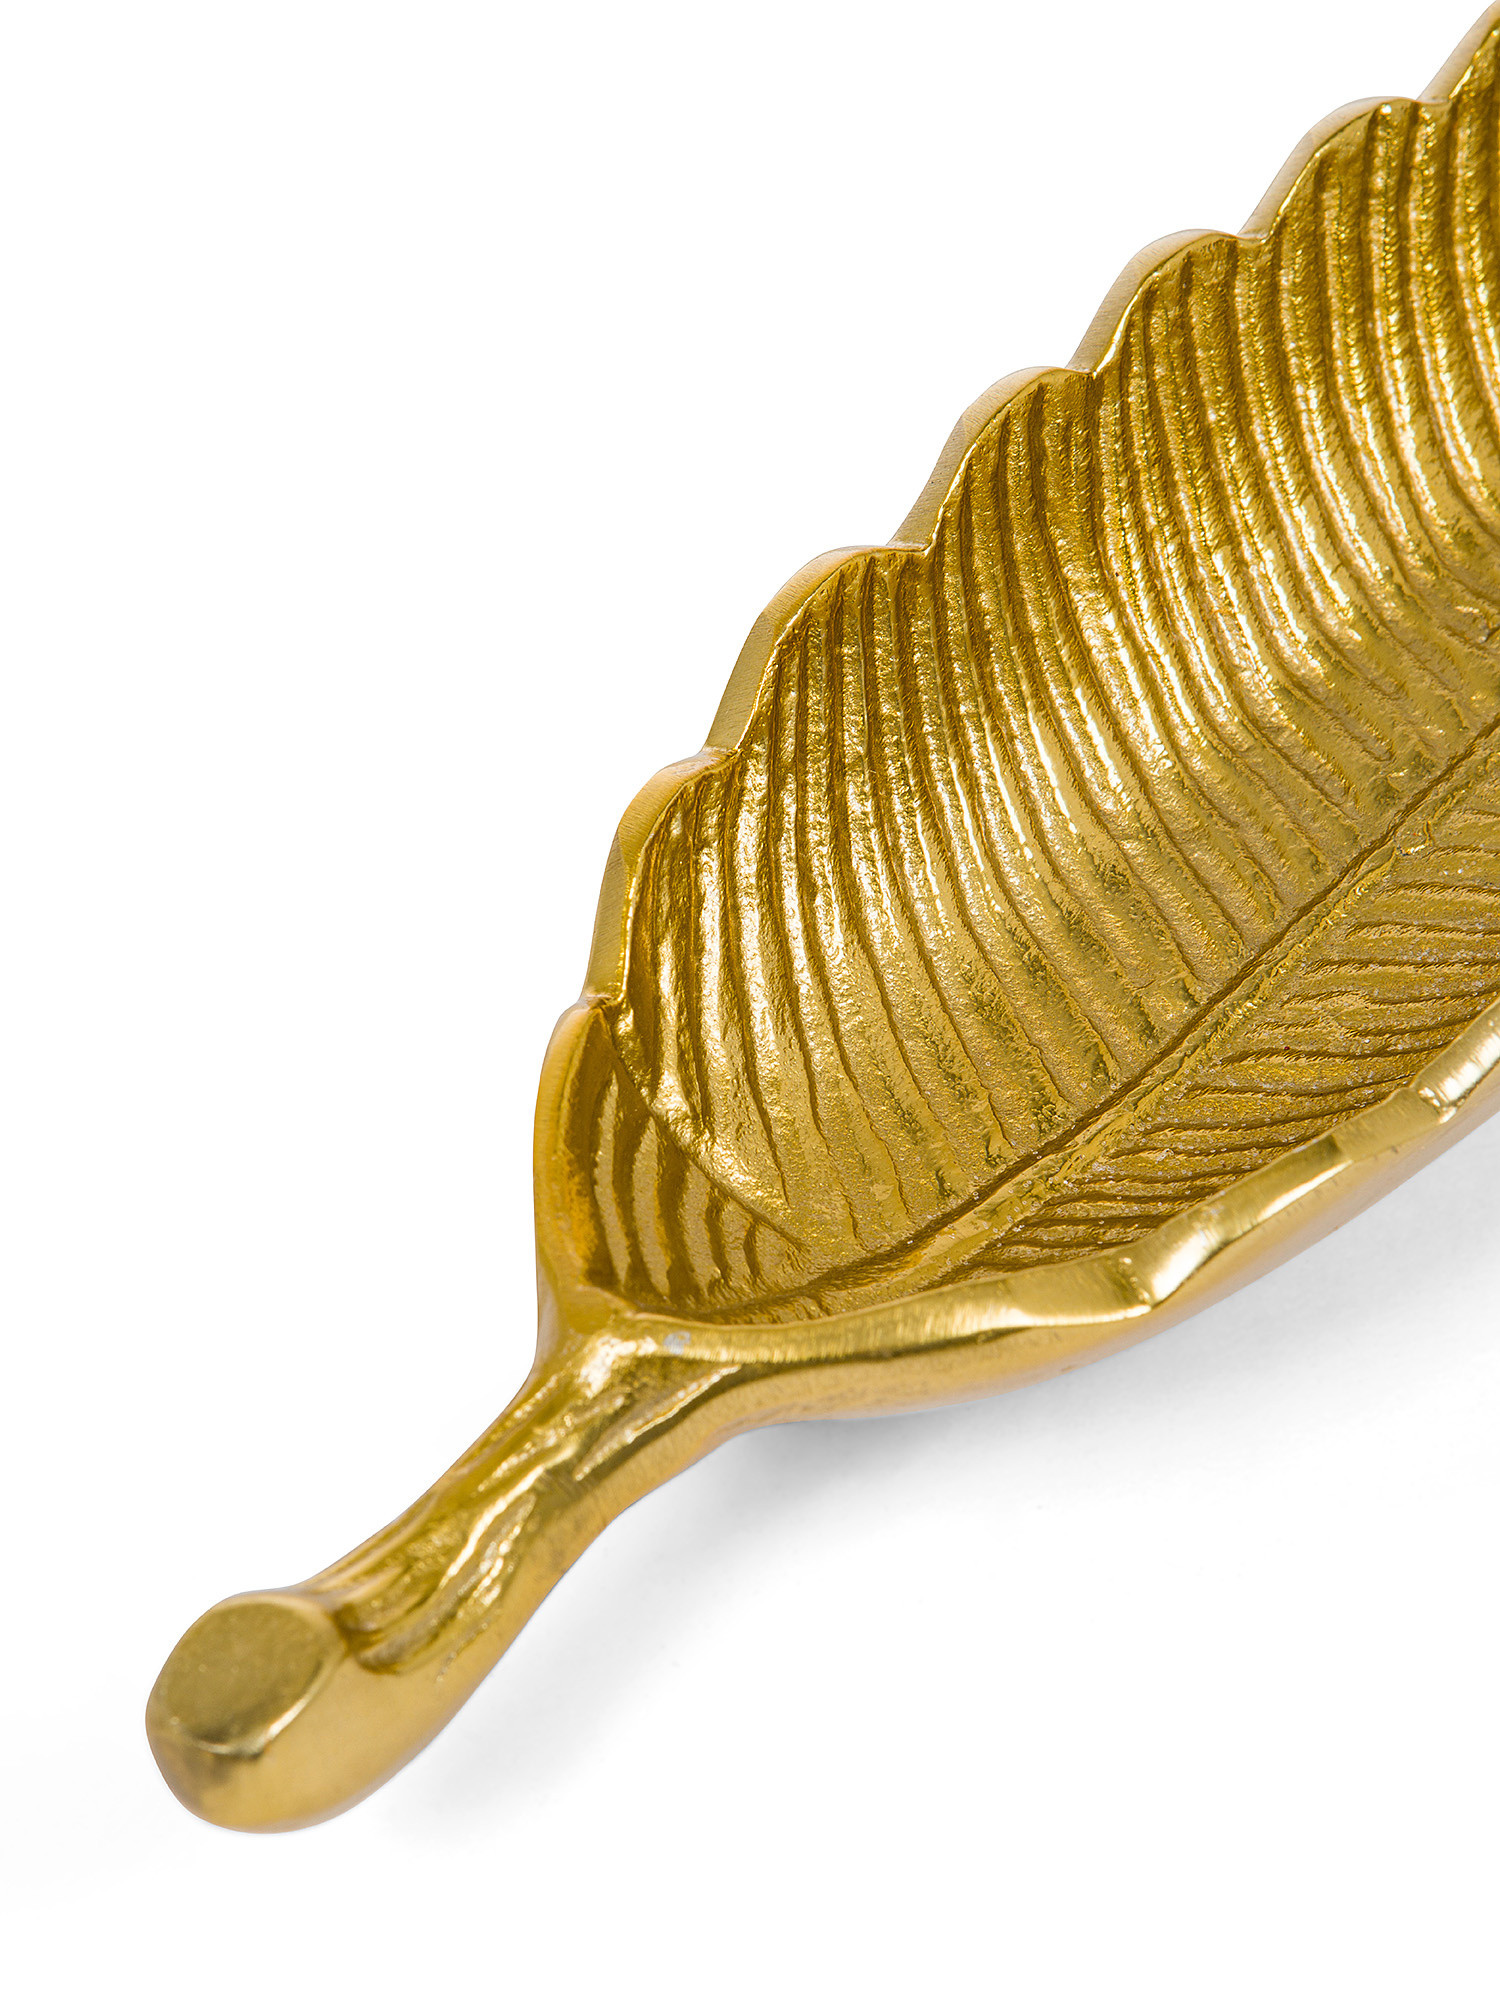 Feather-shaped aluminum pocket emptier, Gold, large image number 1